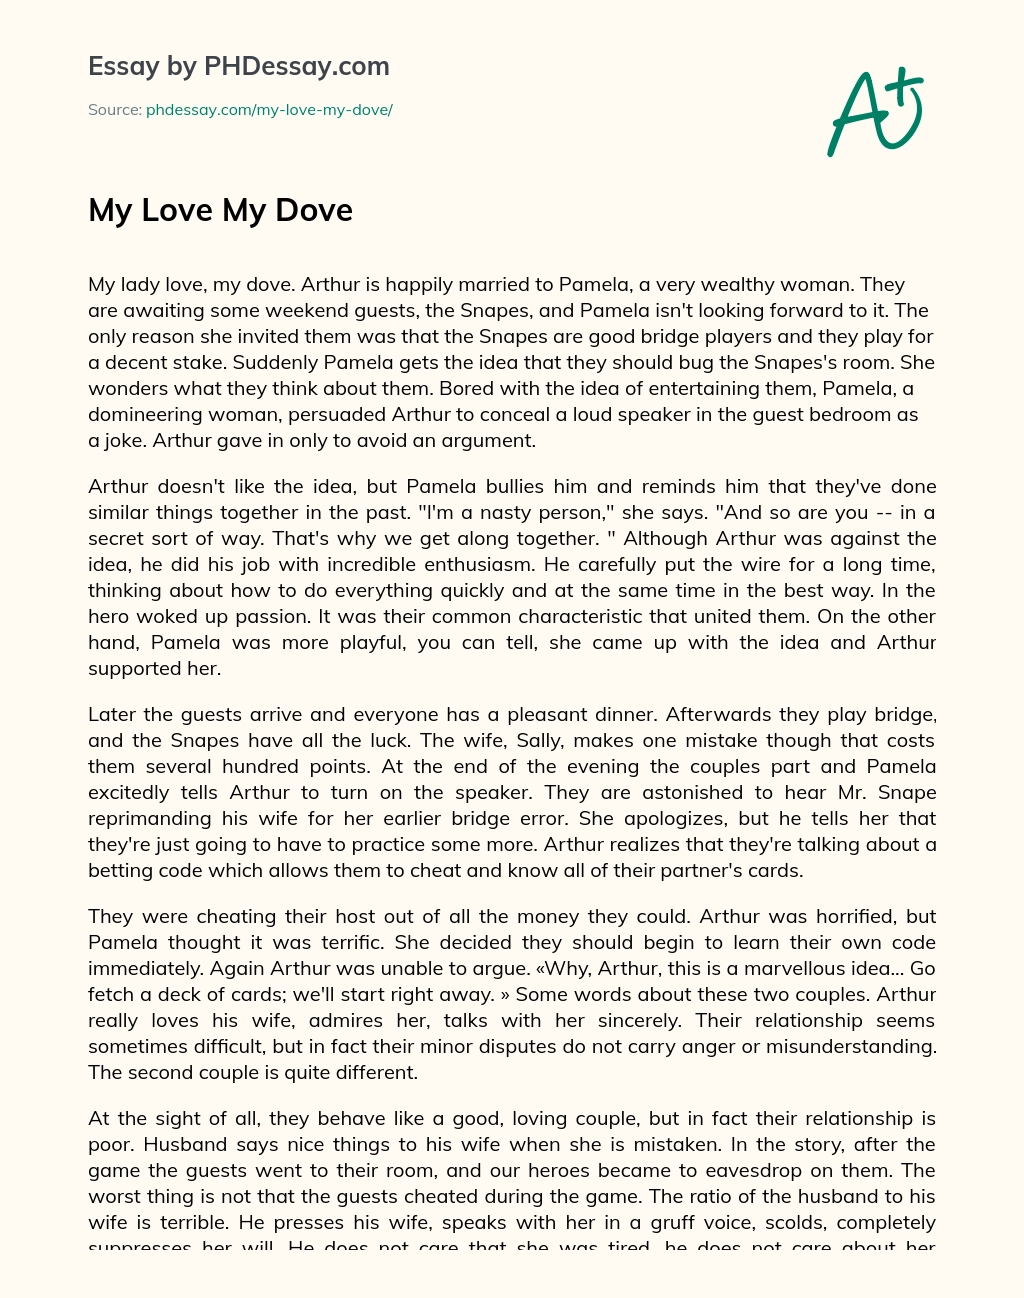 My Love My Dove essay